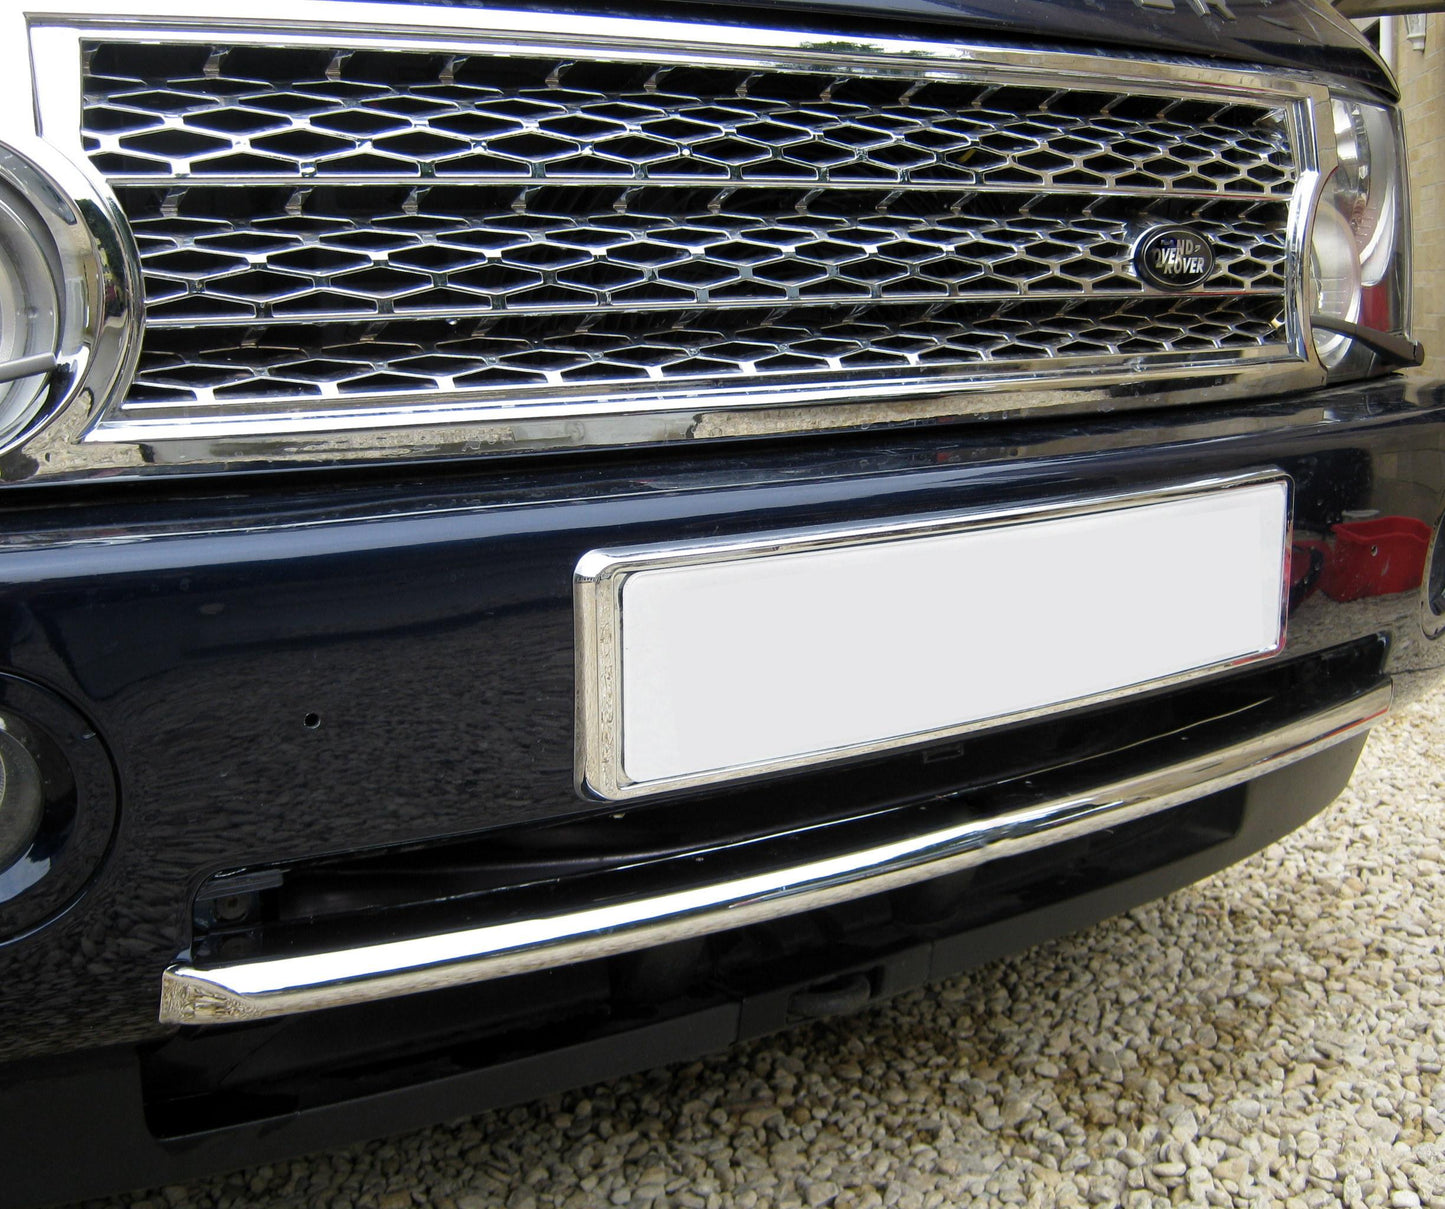 Front Bumper Strip - Chrome for Range Rover L322